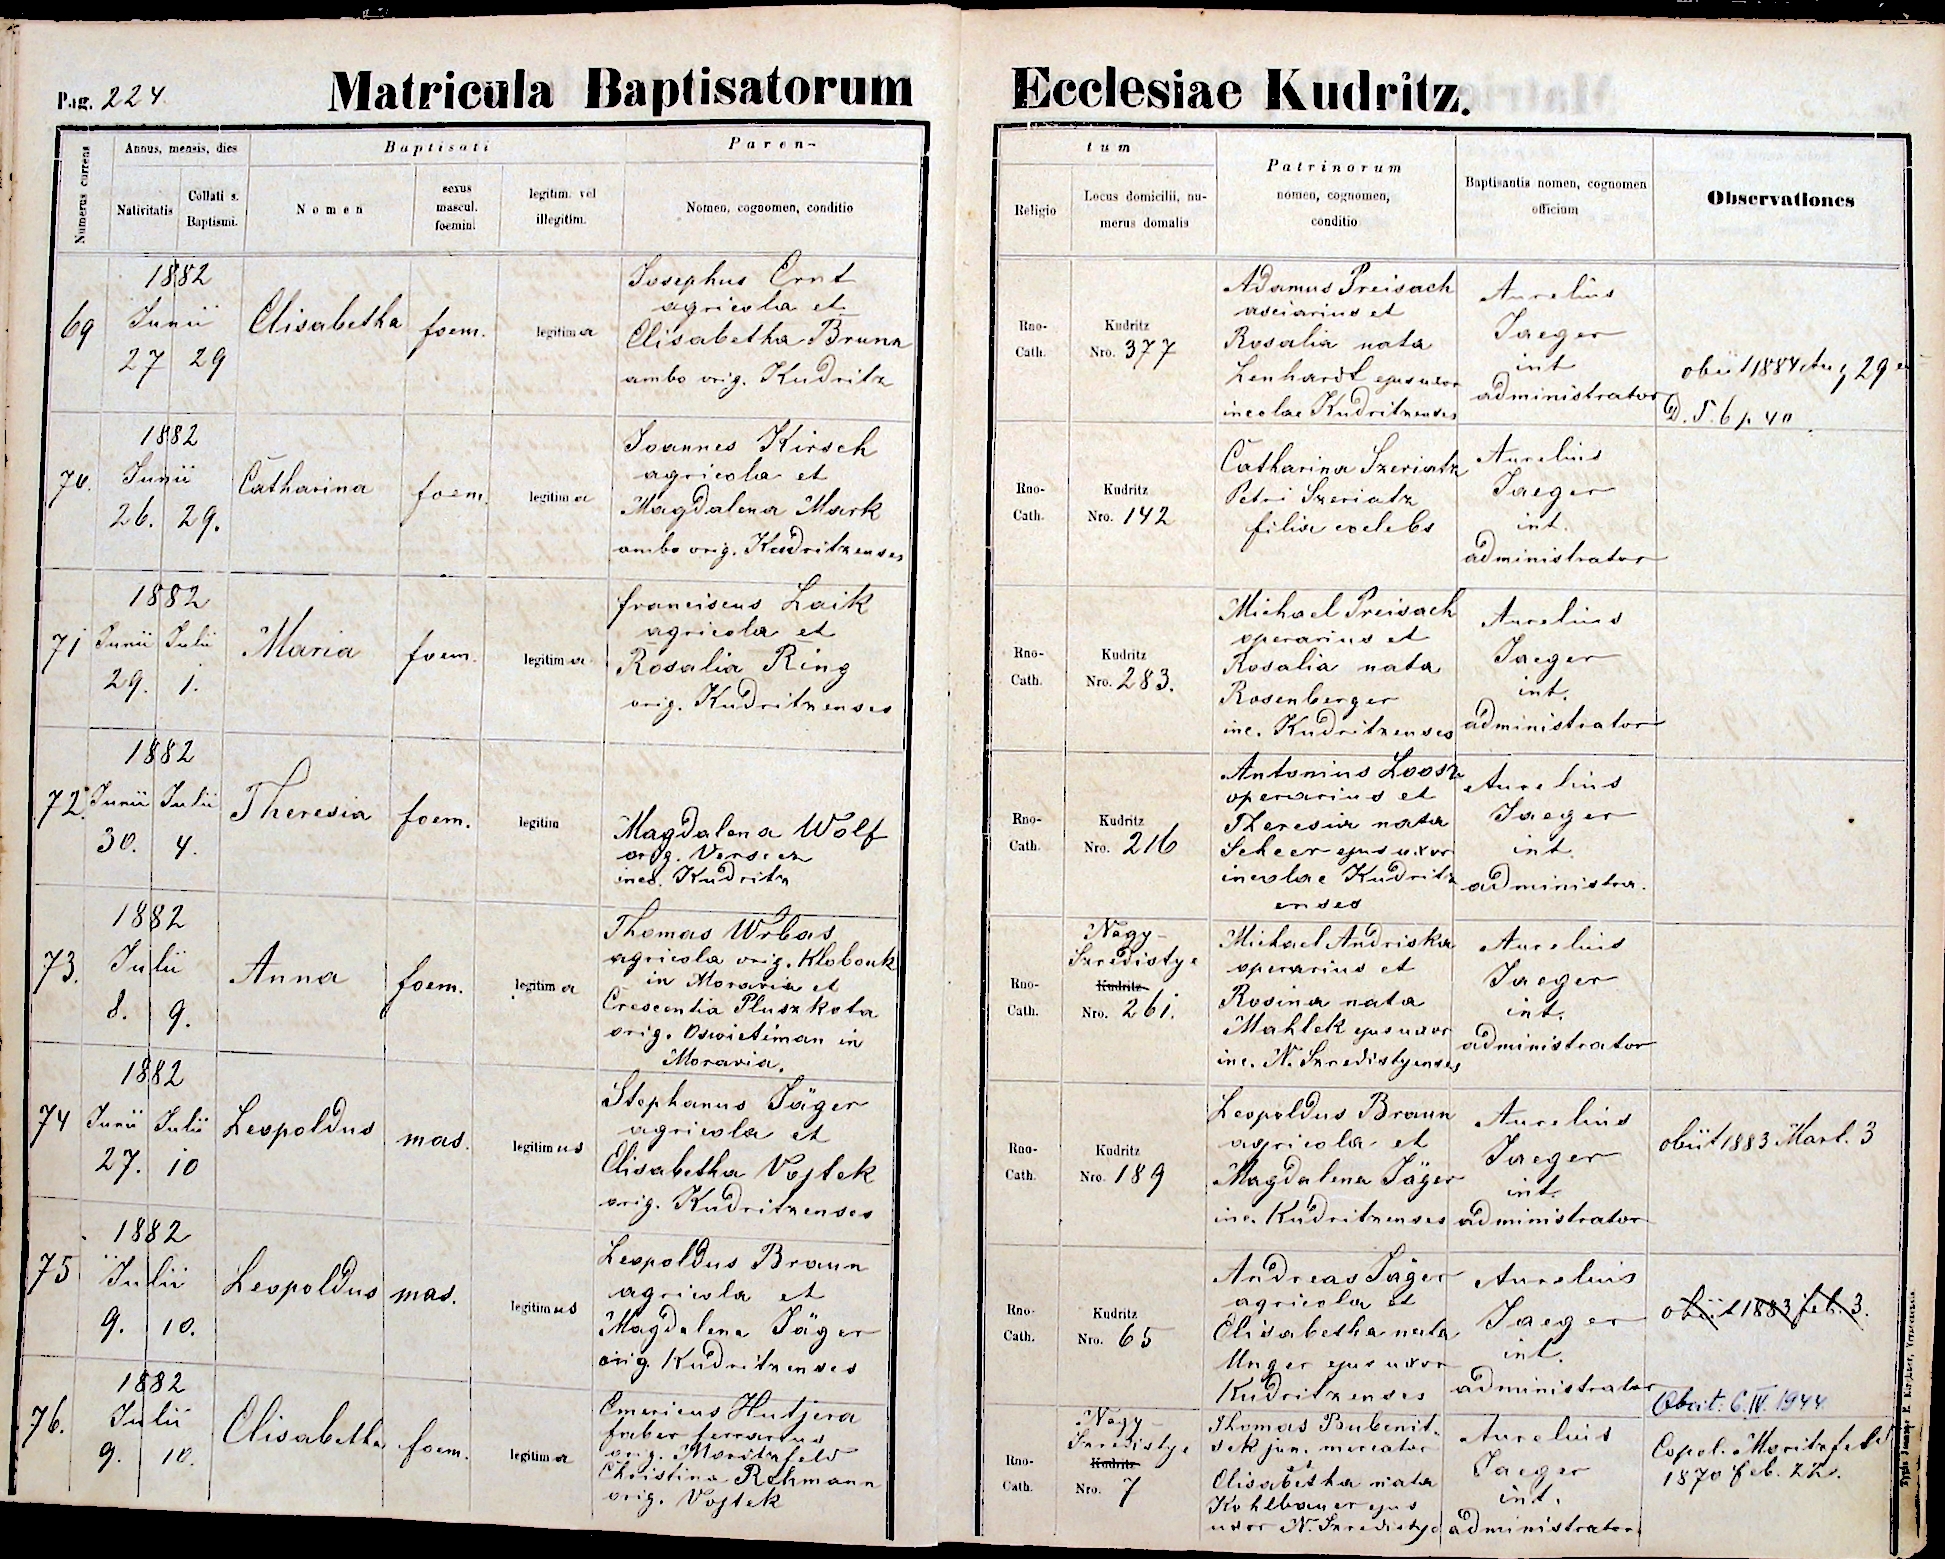 images/church_records/BIRTHS/1884-1899B/1899/224